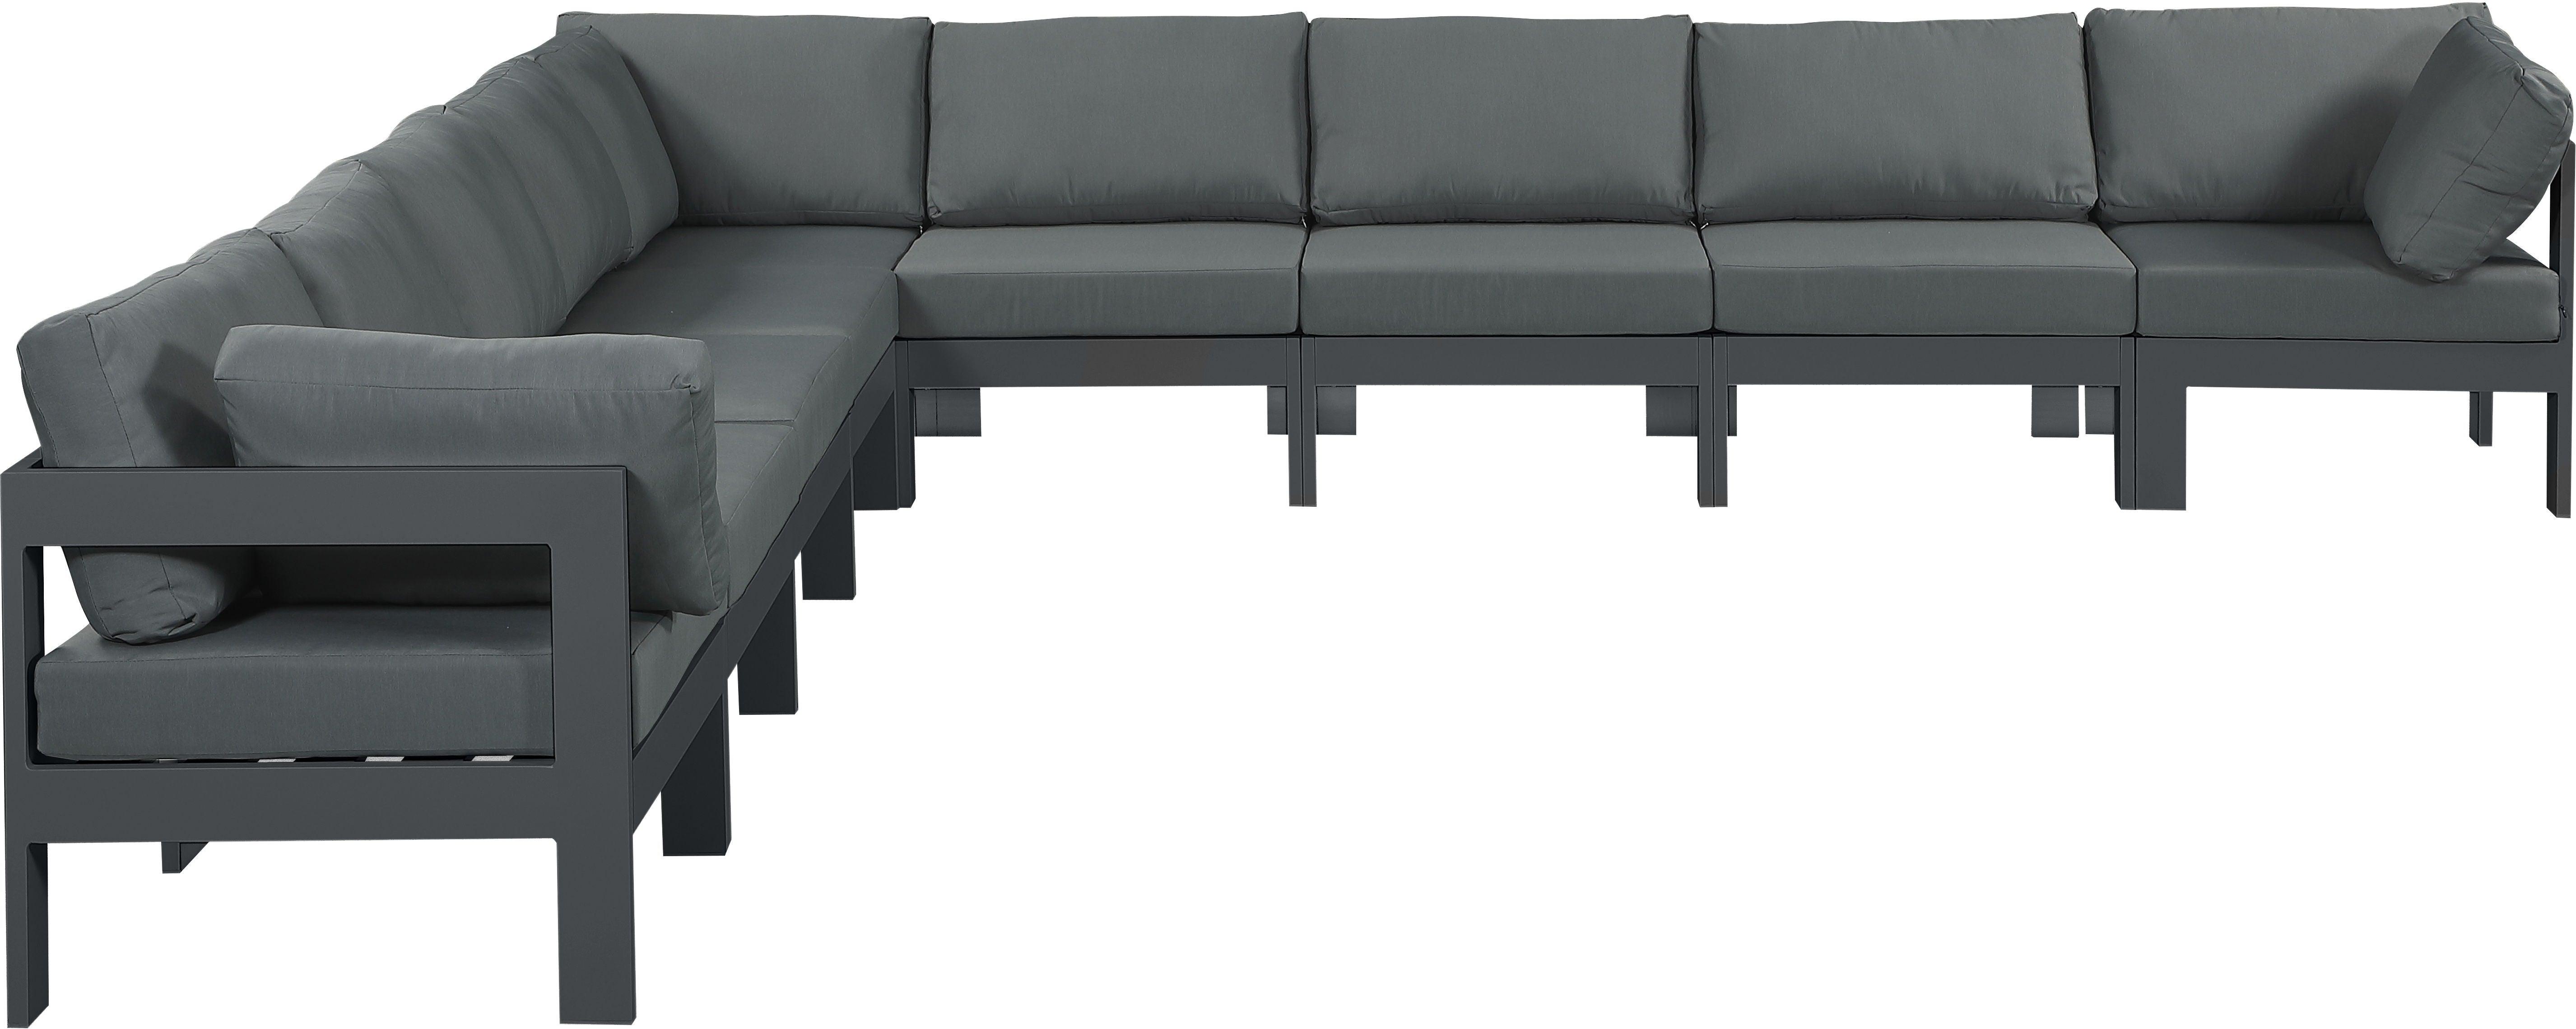 Meridian Furniture - Nizuc - Outdoor Patio Modular Sectional 9 Piece - Grey - Modern & Contemporary - 5th Avenue Furniture